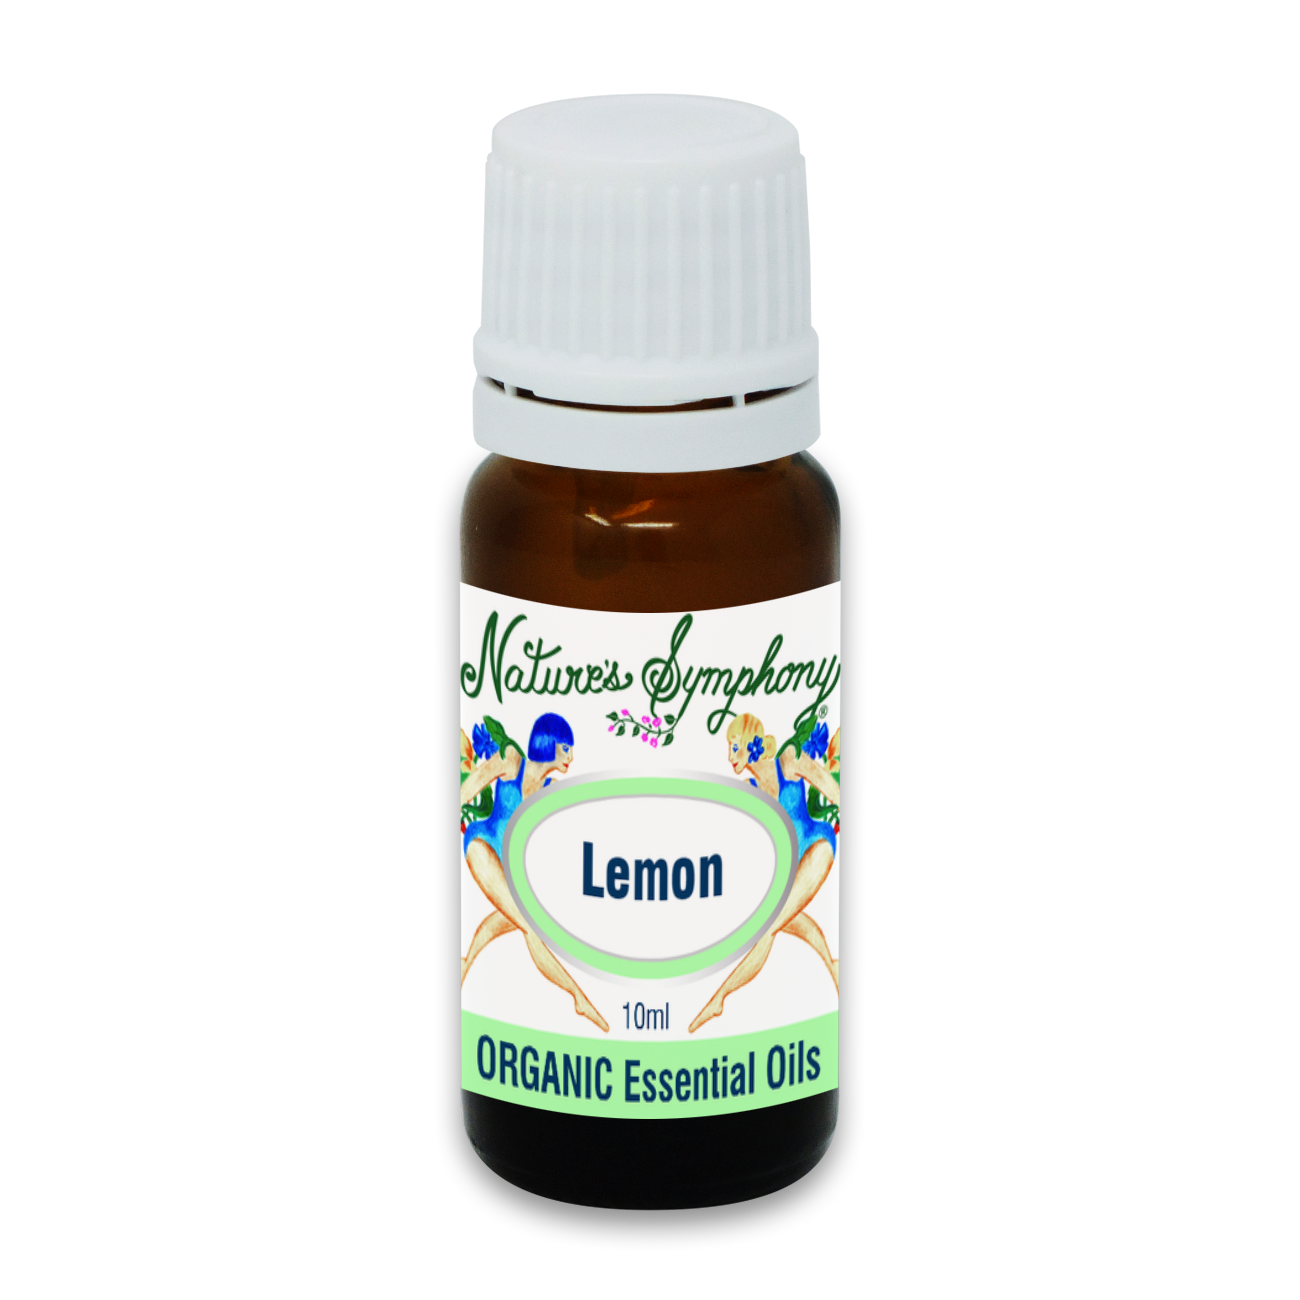 Lemon, Organic/Wildcrafted oil - 10ml